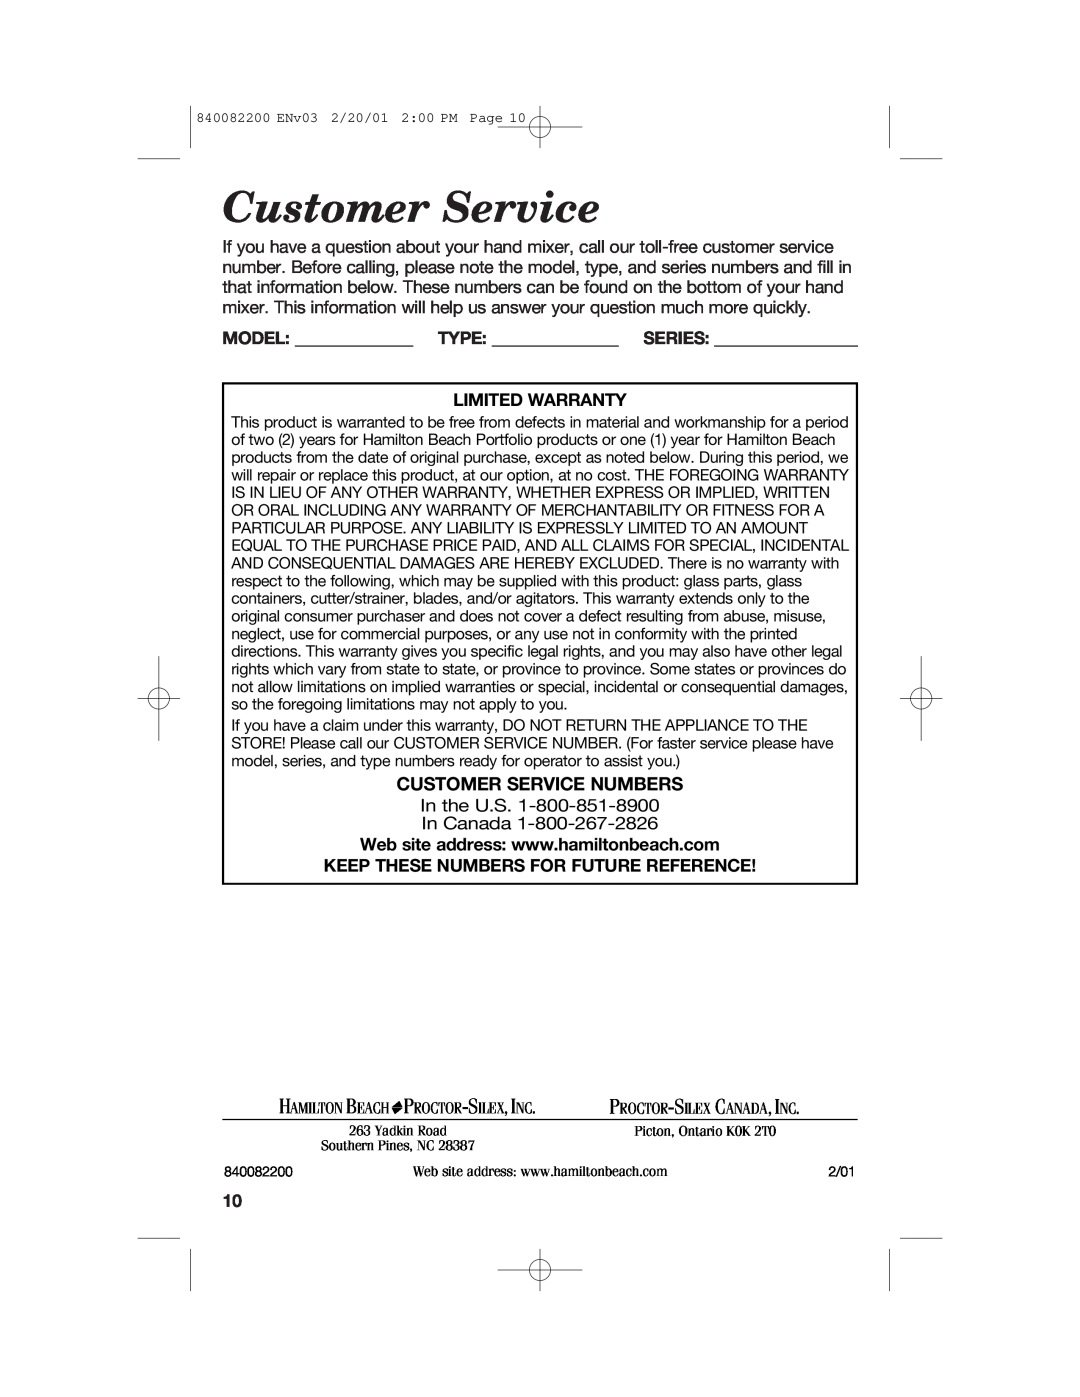 Hamilton Beach 62695RC manual Customer Service Numbers, Model Type Series Limited Warranty, Hamilton Beach 